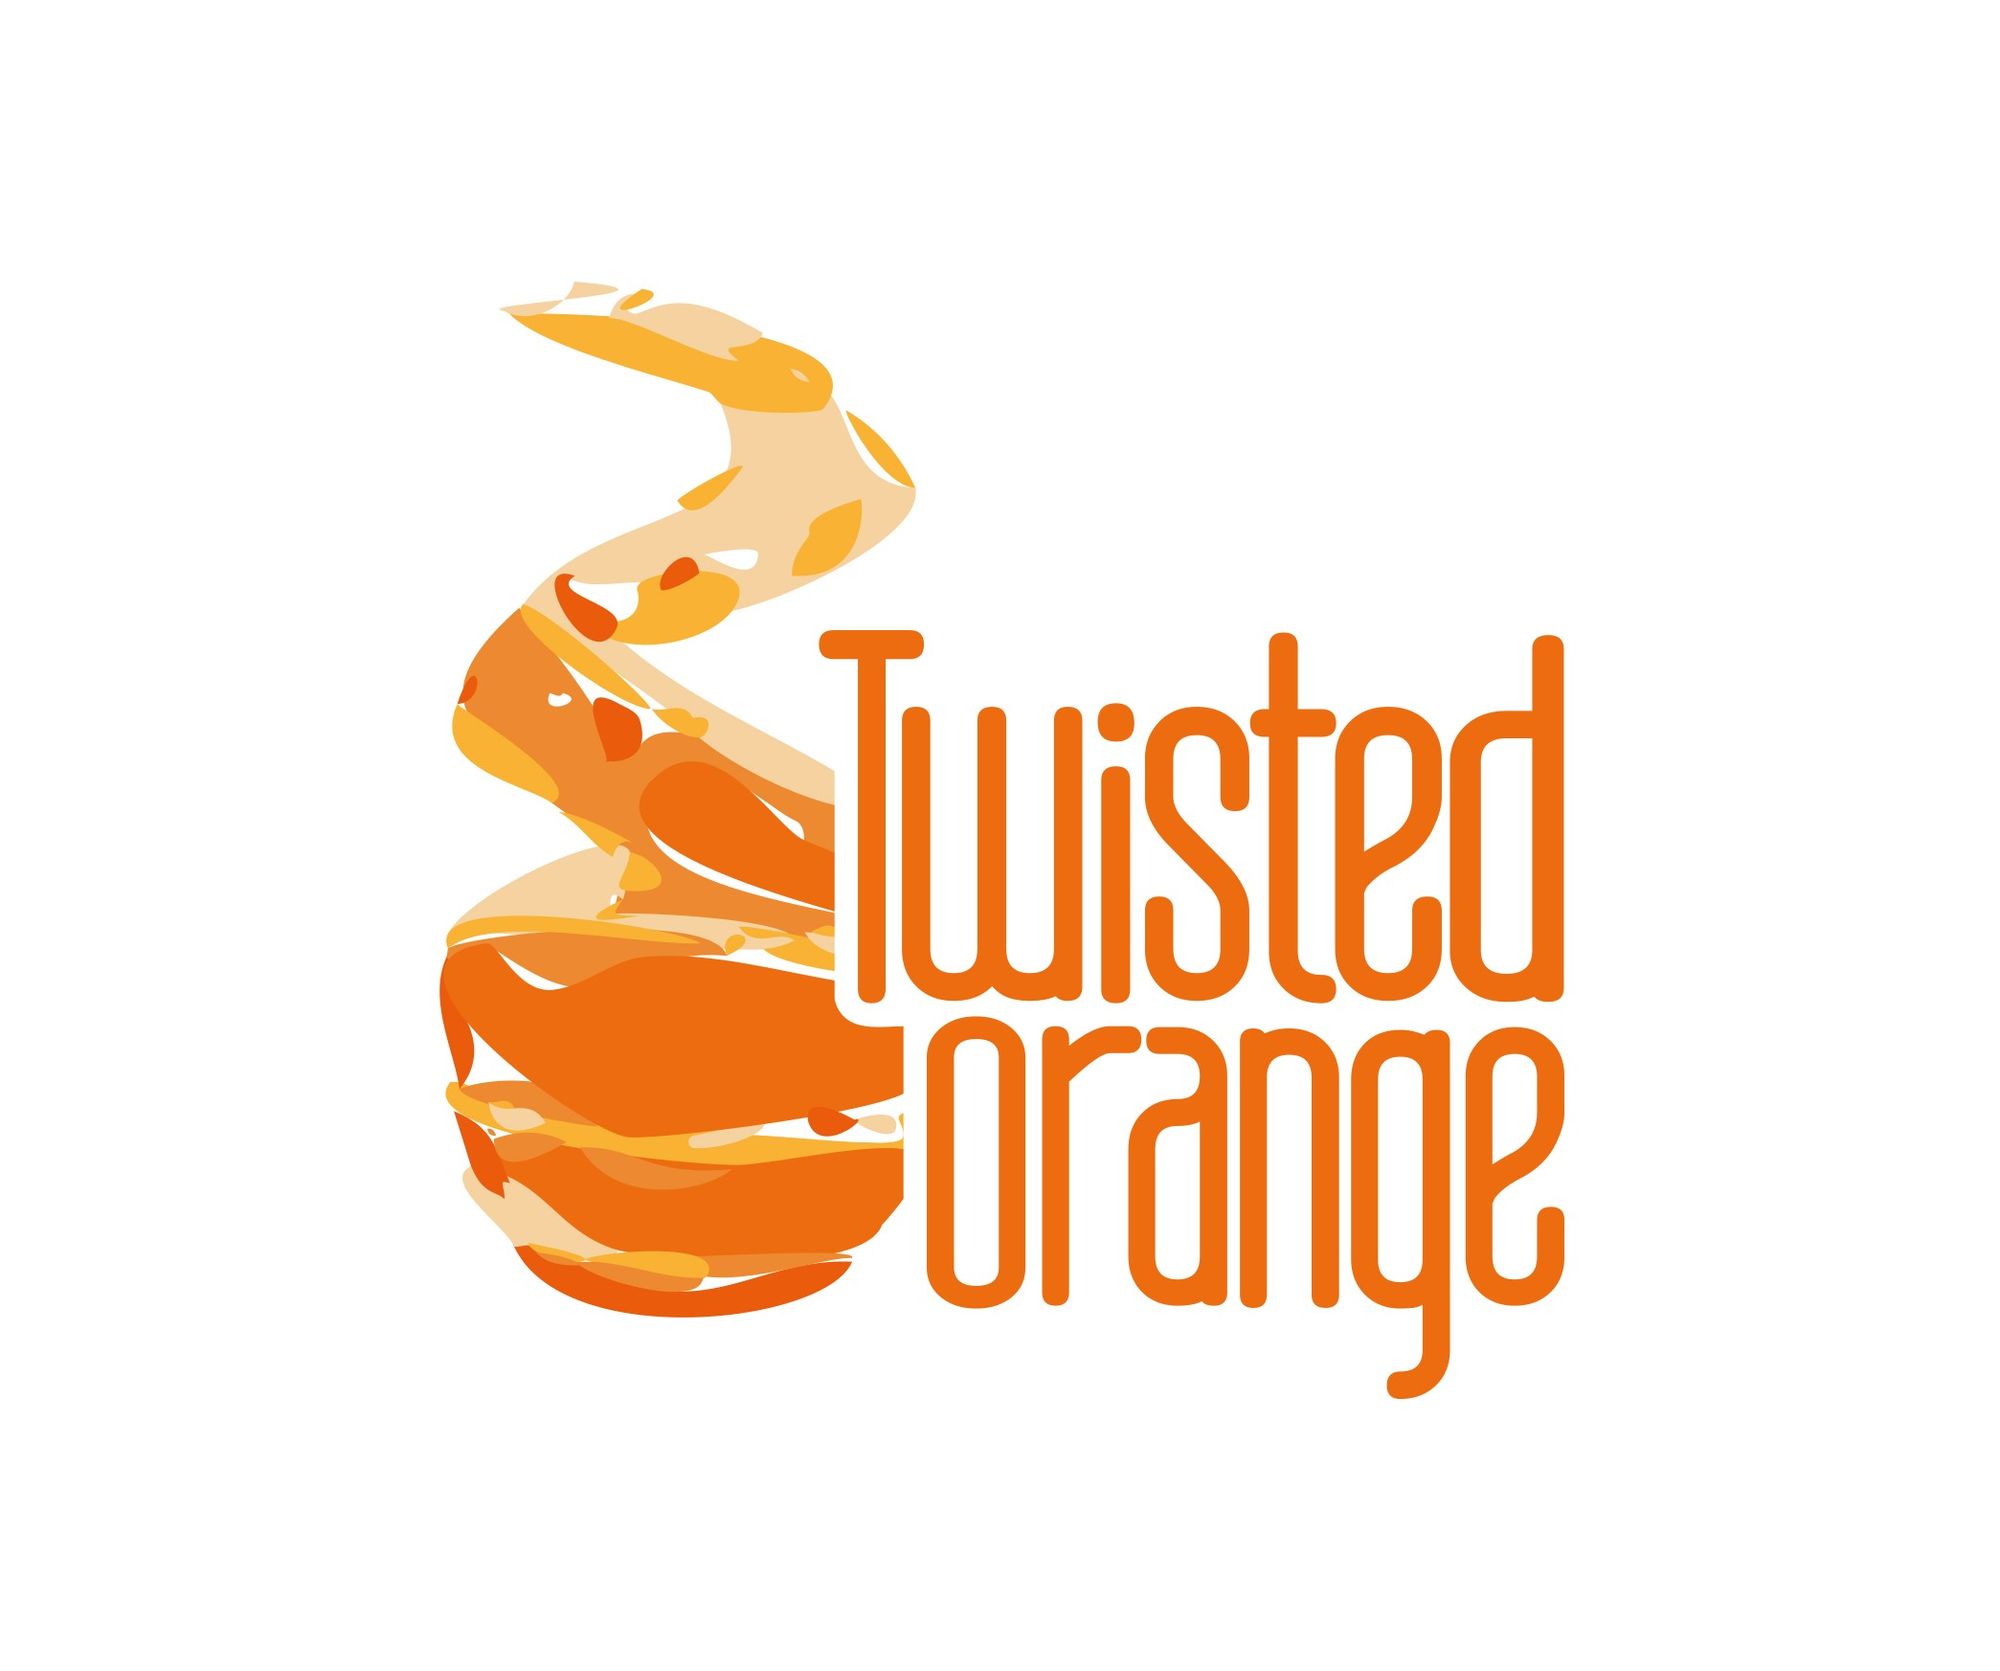 Add Some Zest - Twisted Orange